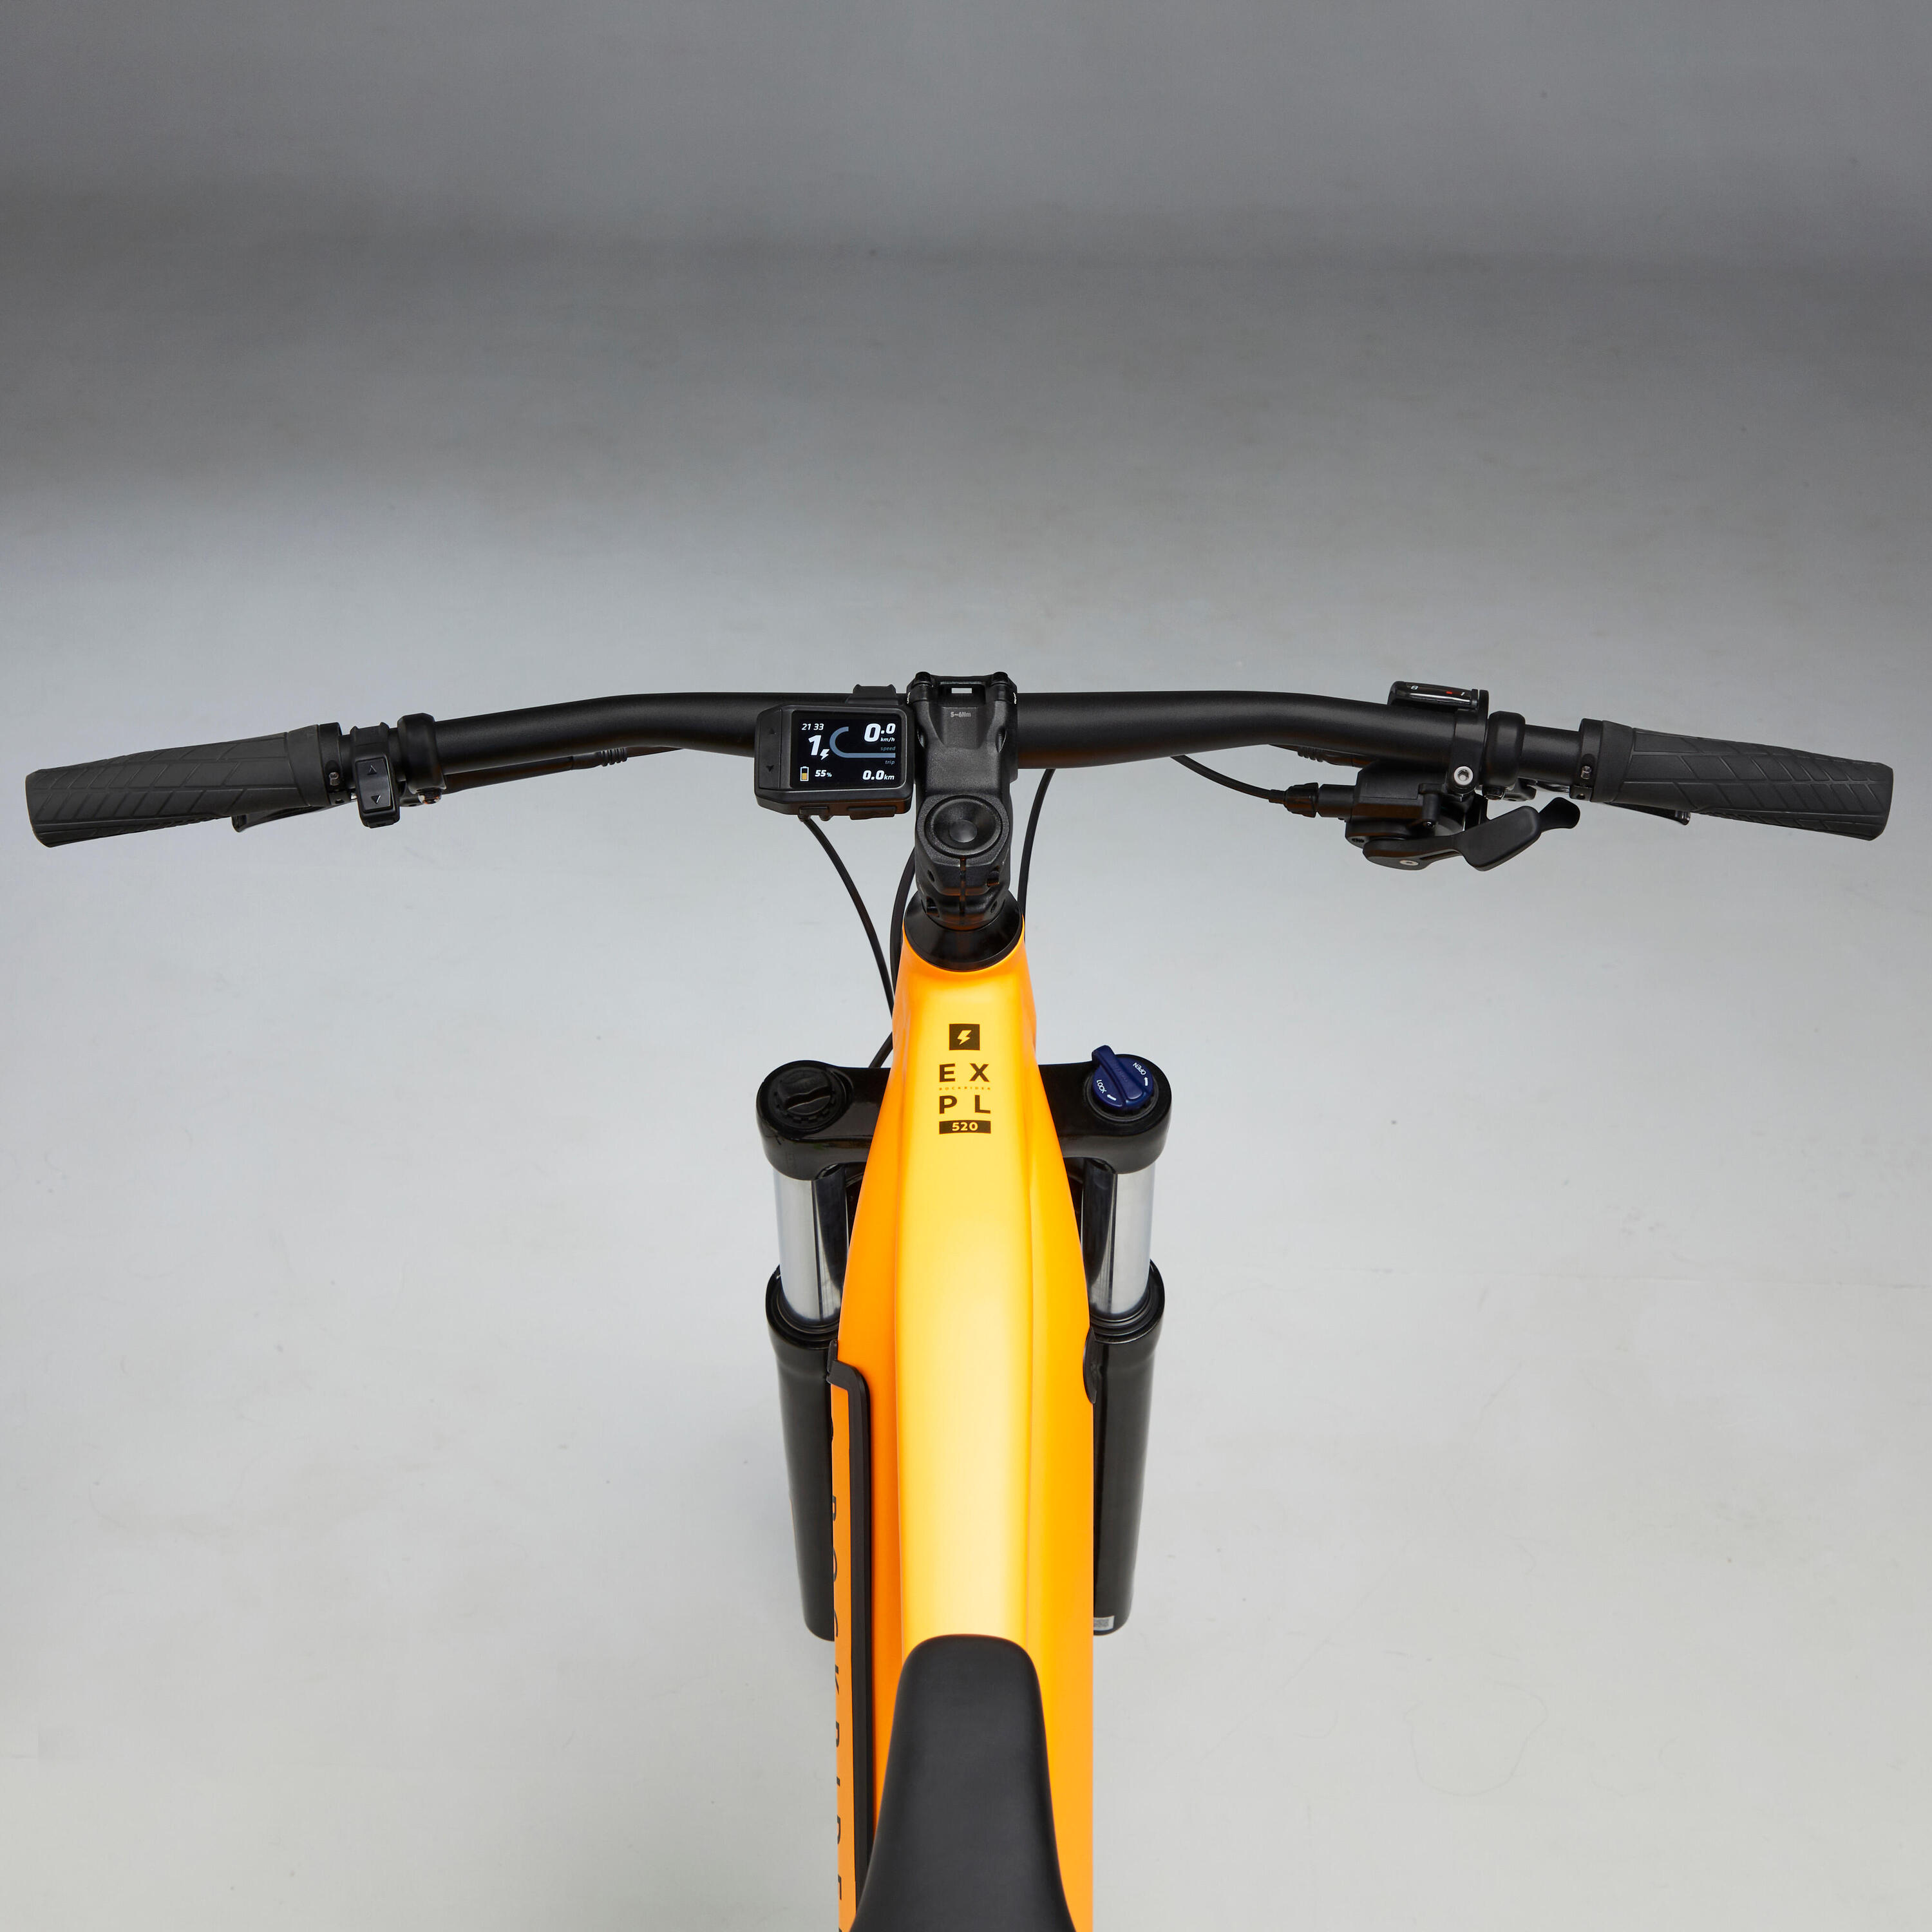 29" Hardtail Electric Mountain Bike E-Expl 520 - Mango 9/13